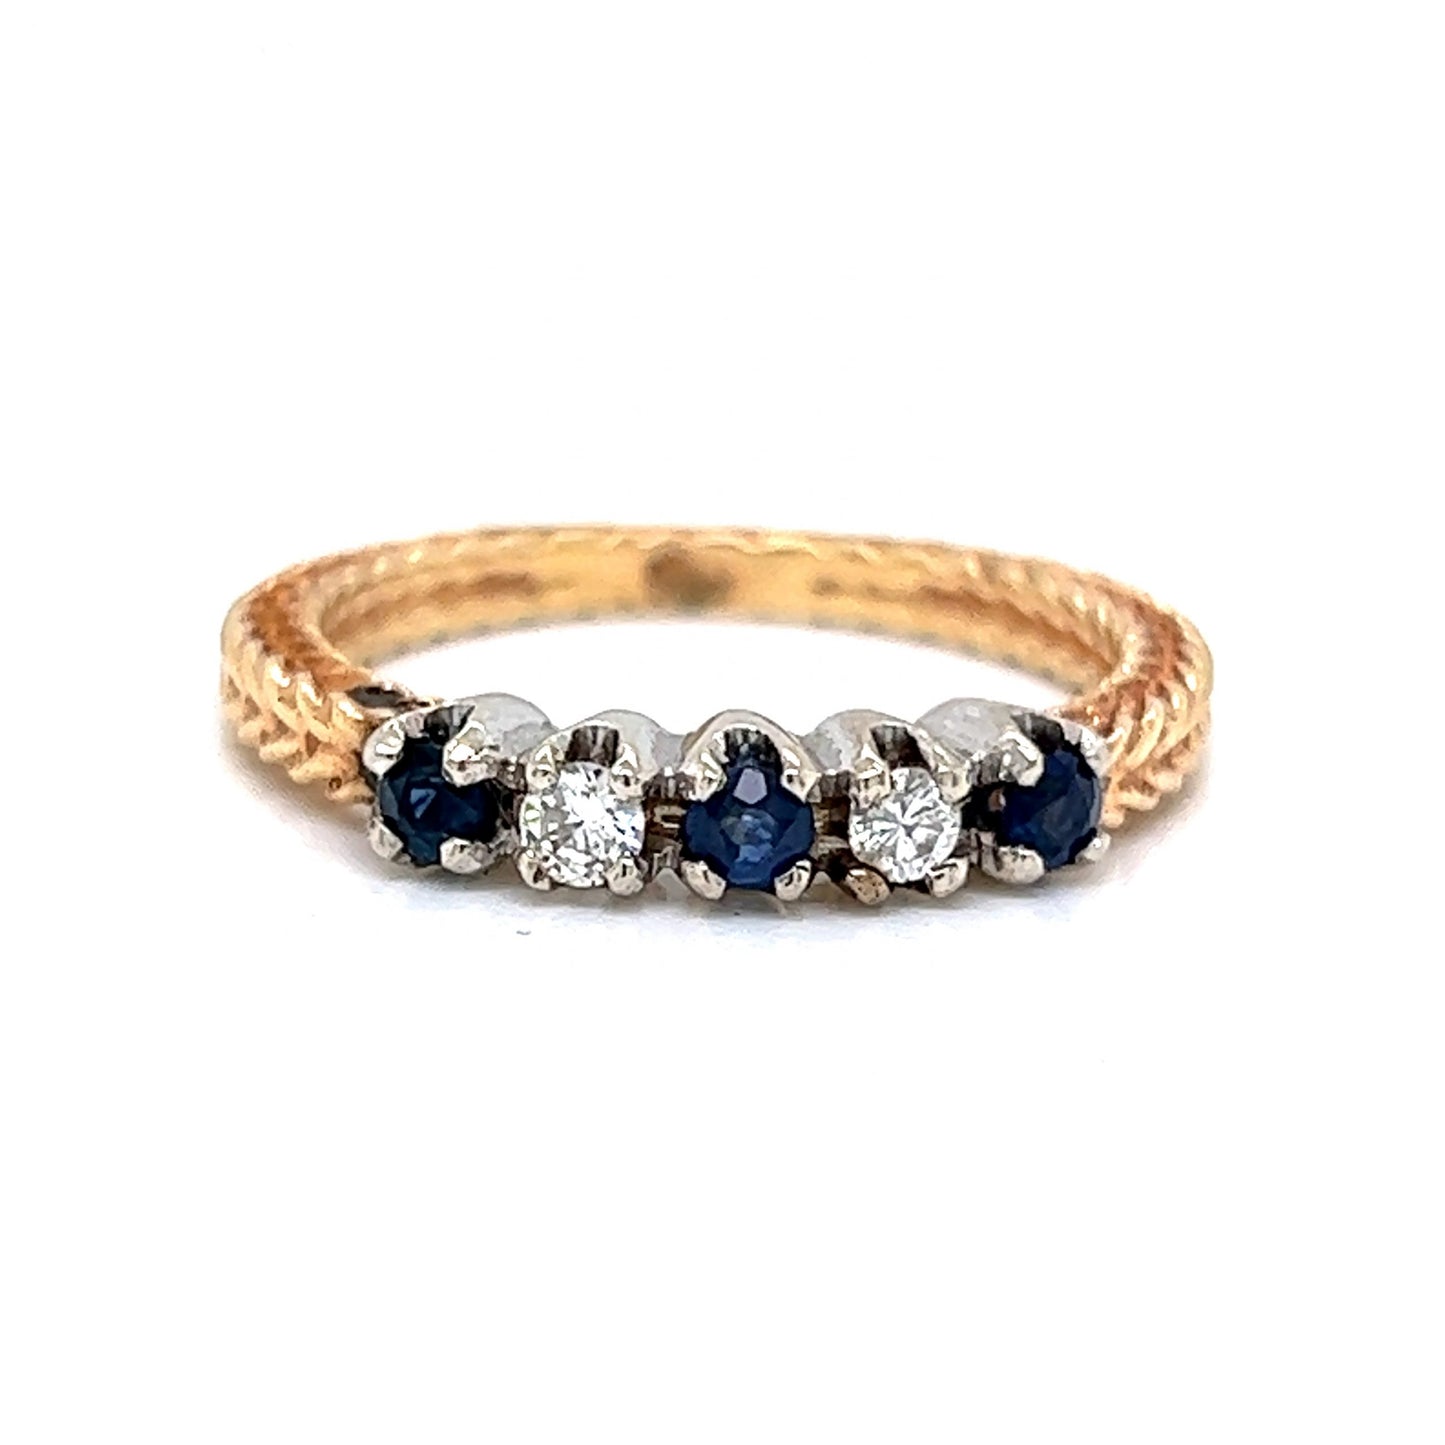 Vintage Alternating Diamond & Sapphire Ring in 14k Yellow Gold